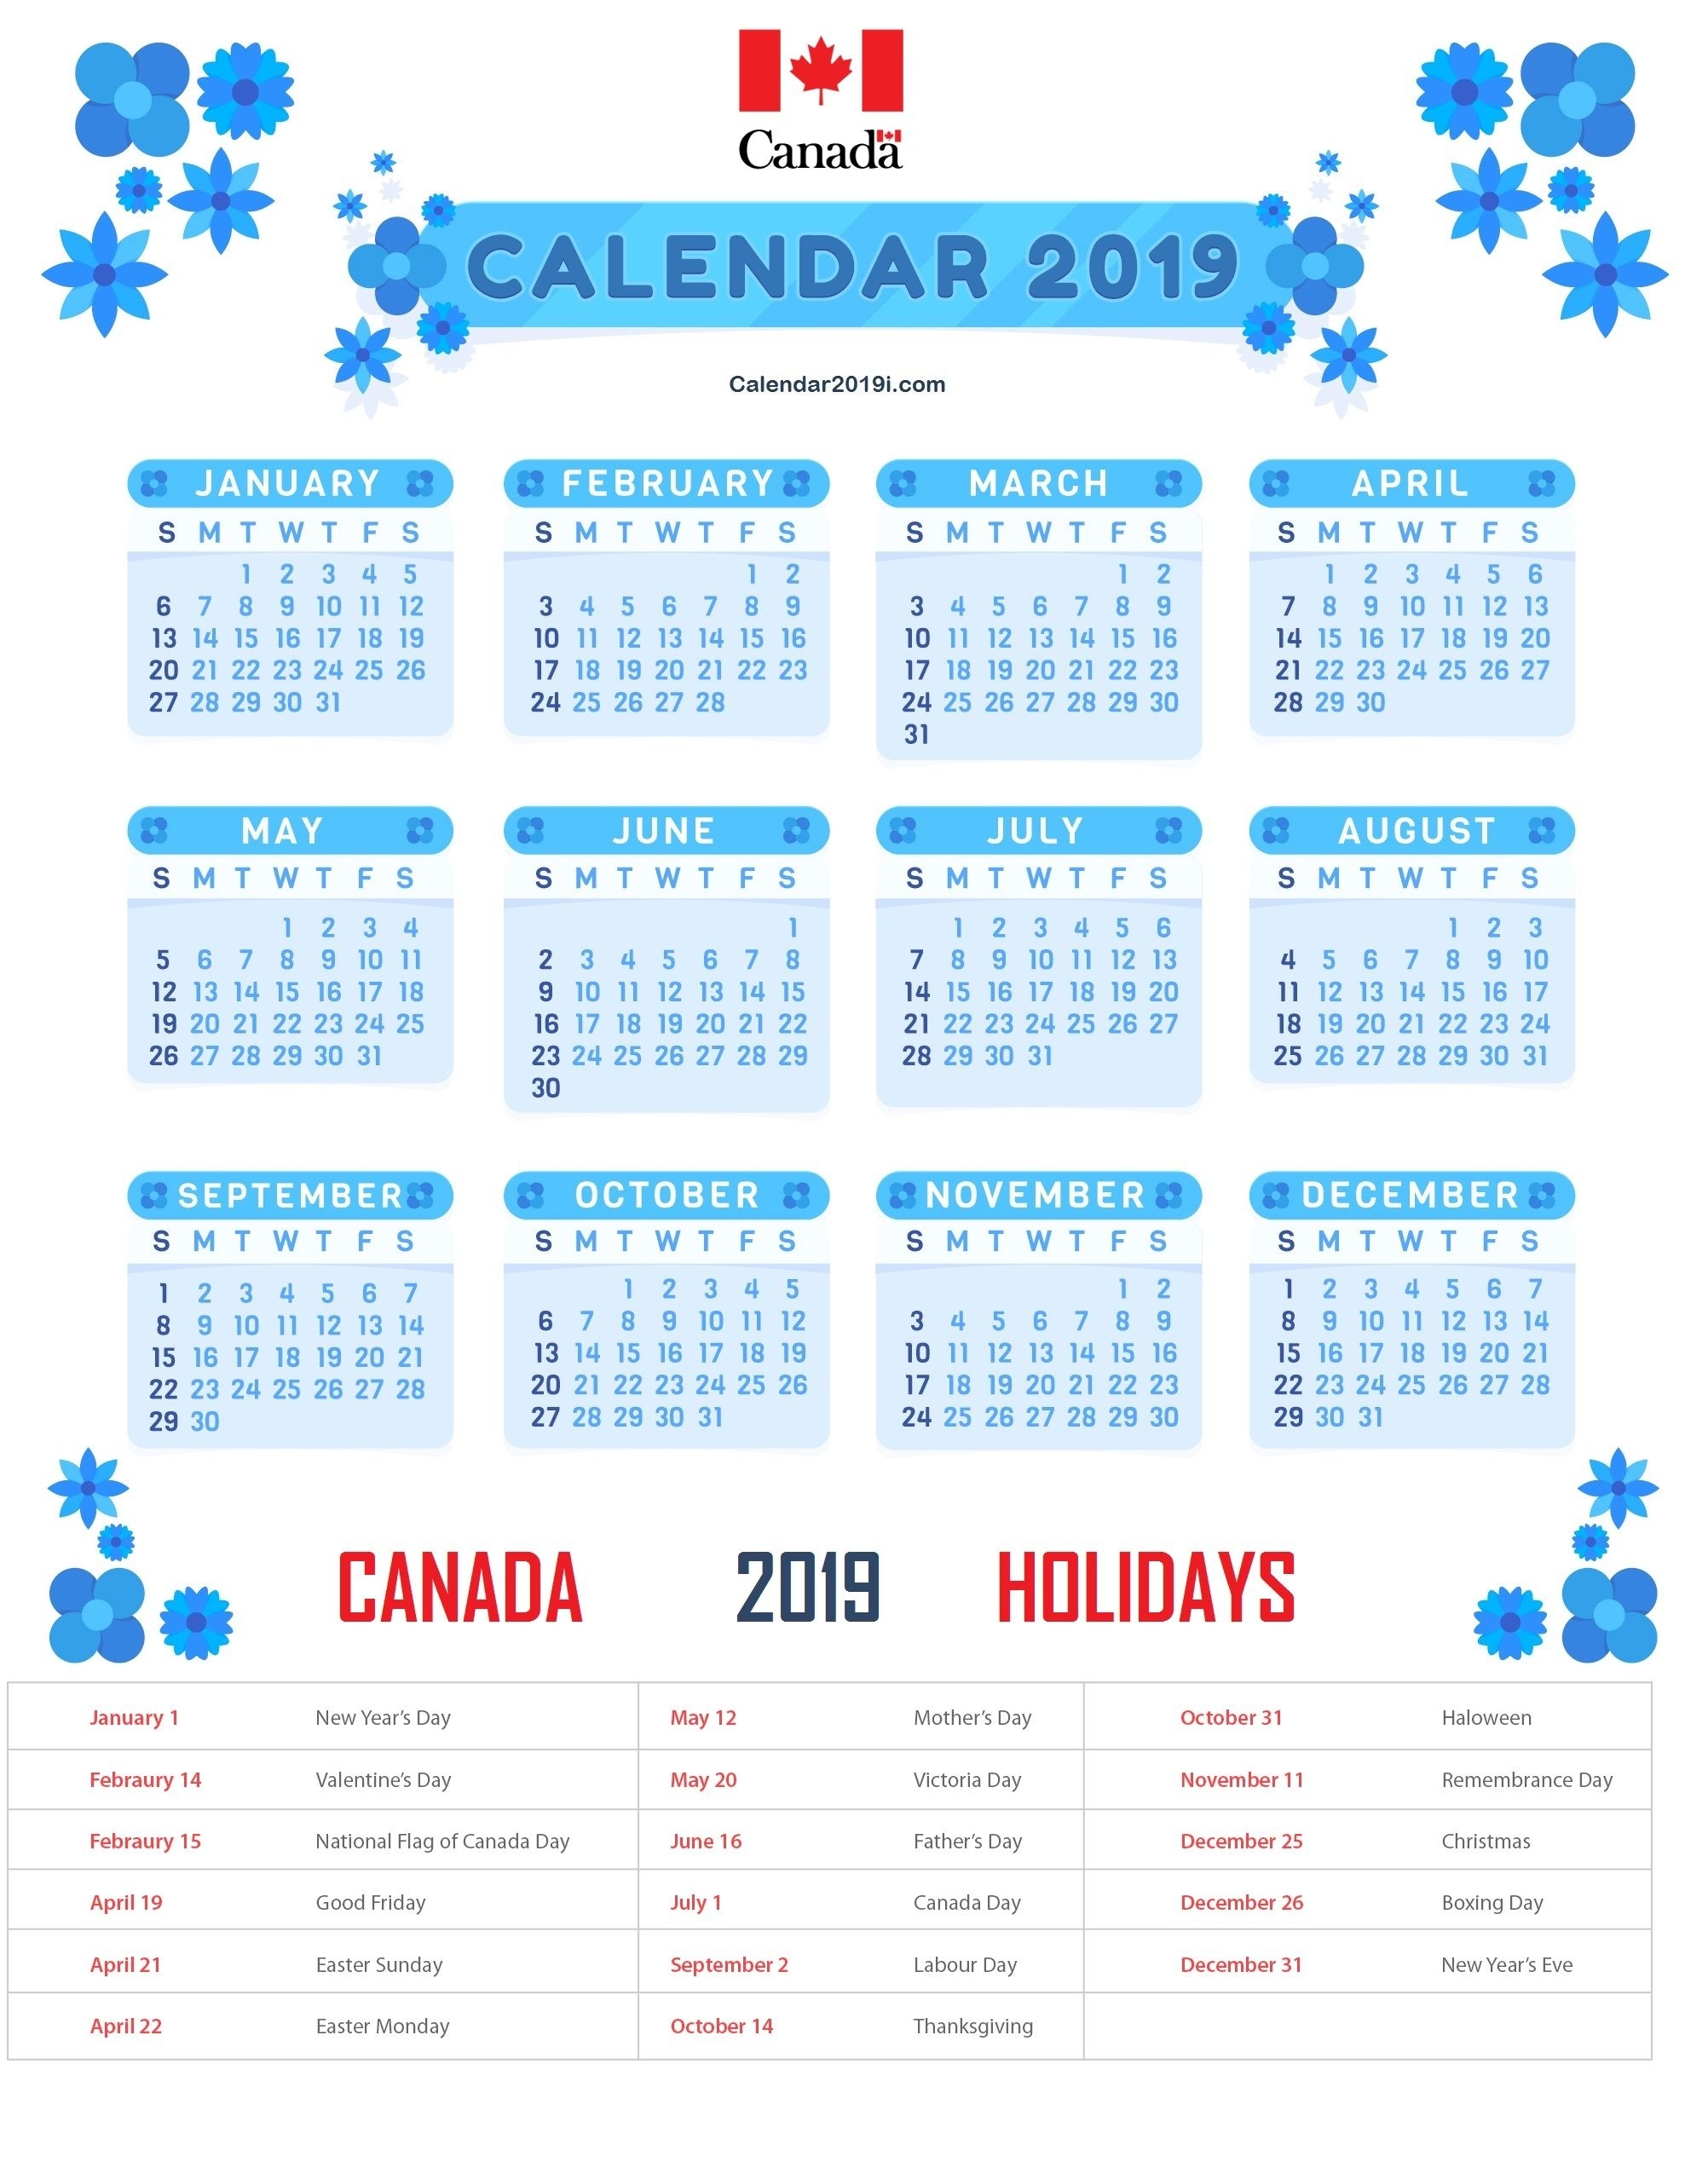 Canada Holidays Calendar 2019 Templates Printable Bank Public Calendar Of Holidays And Events